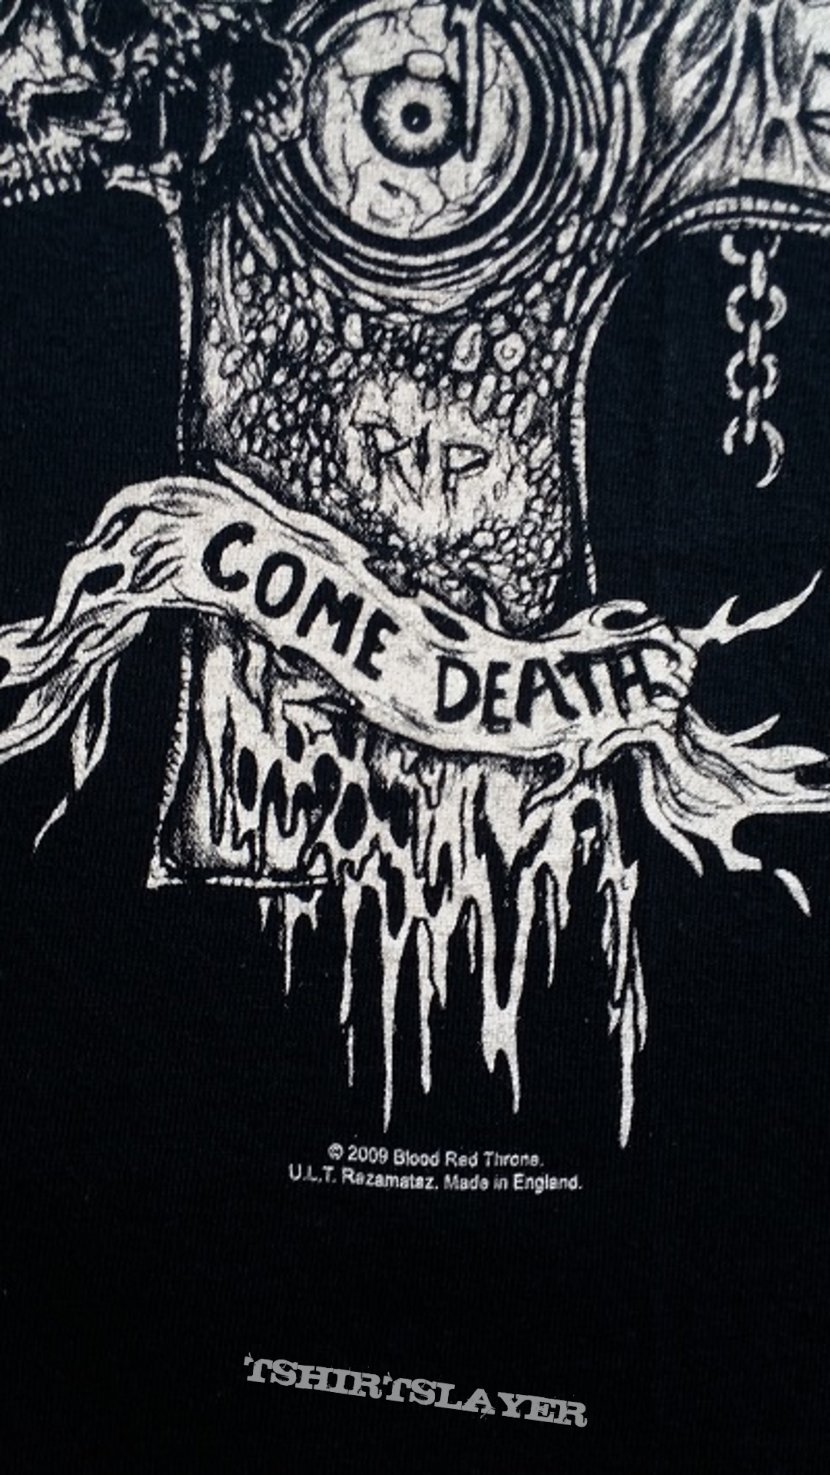 Blood Red Throne - Come Death shirt | TShirtSlayer TShirt and ...